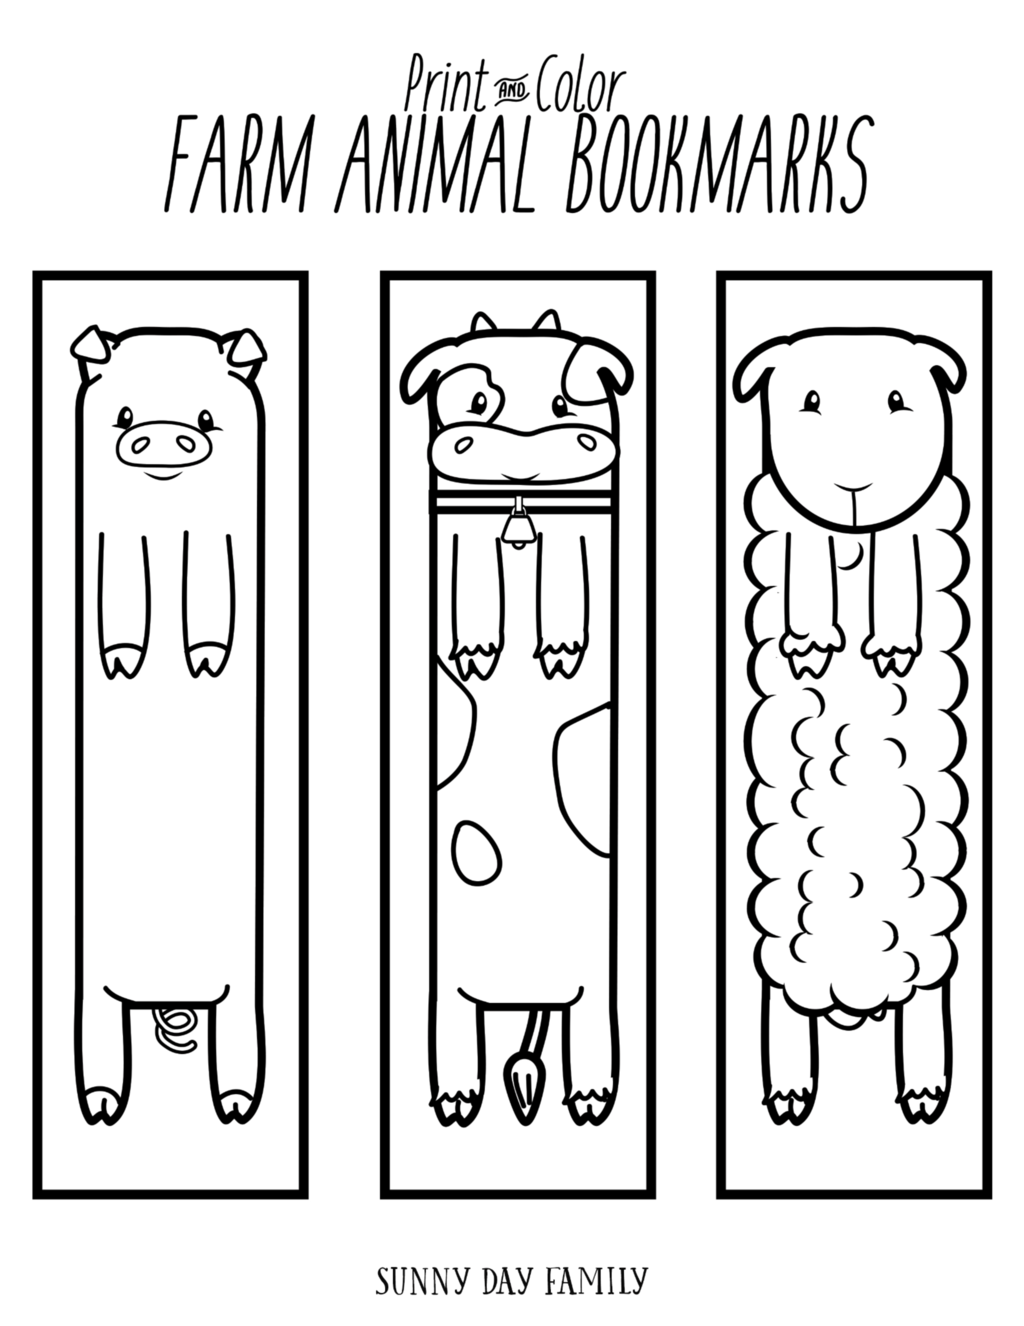 Free Printable Farm Animal Bookmarks For Kids To Color Bookmarks Kids 